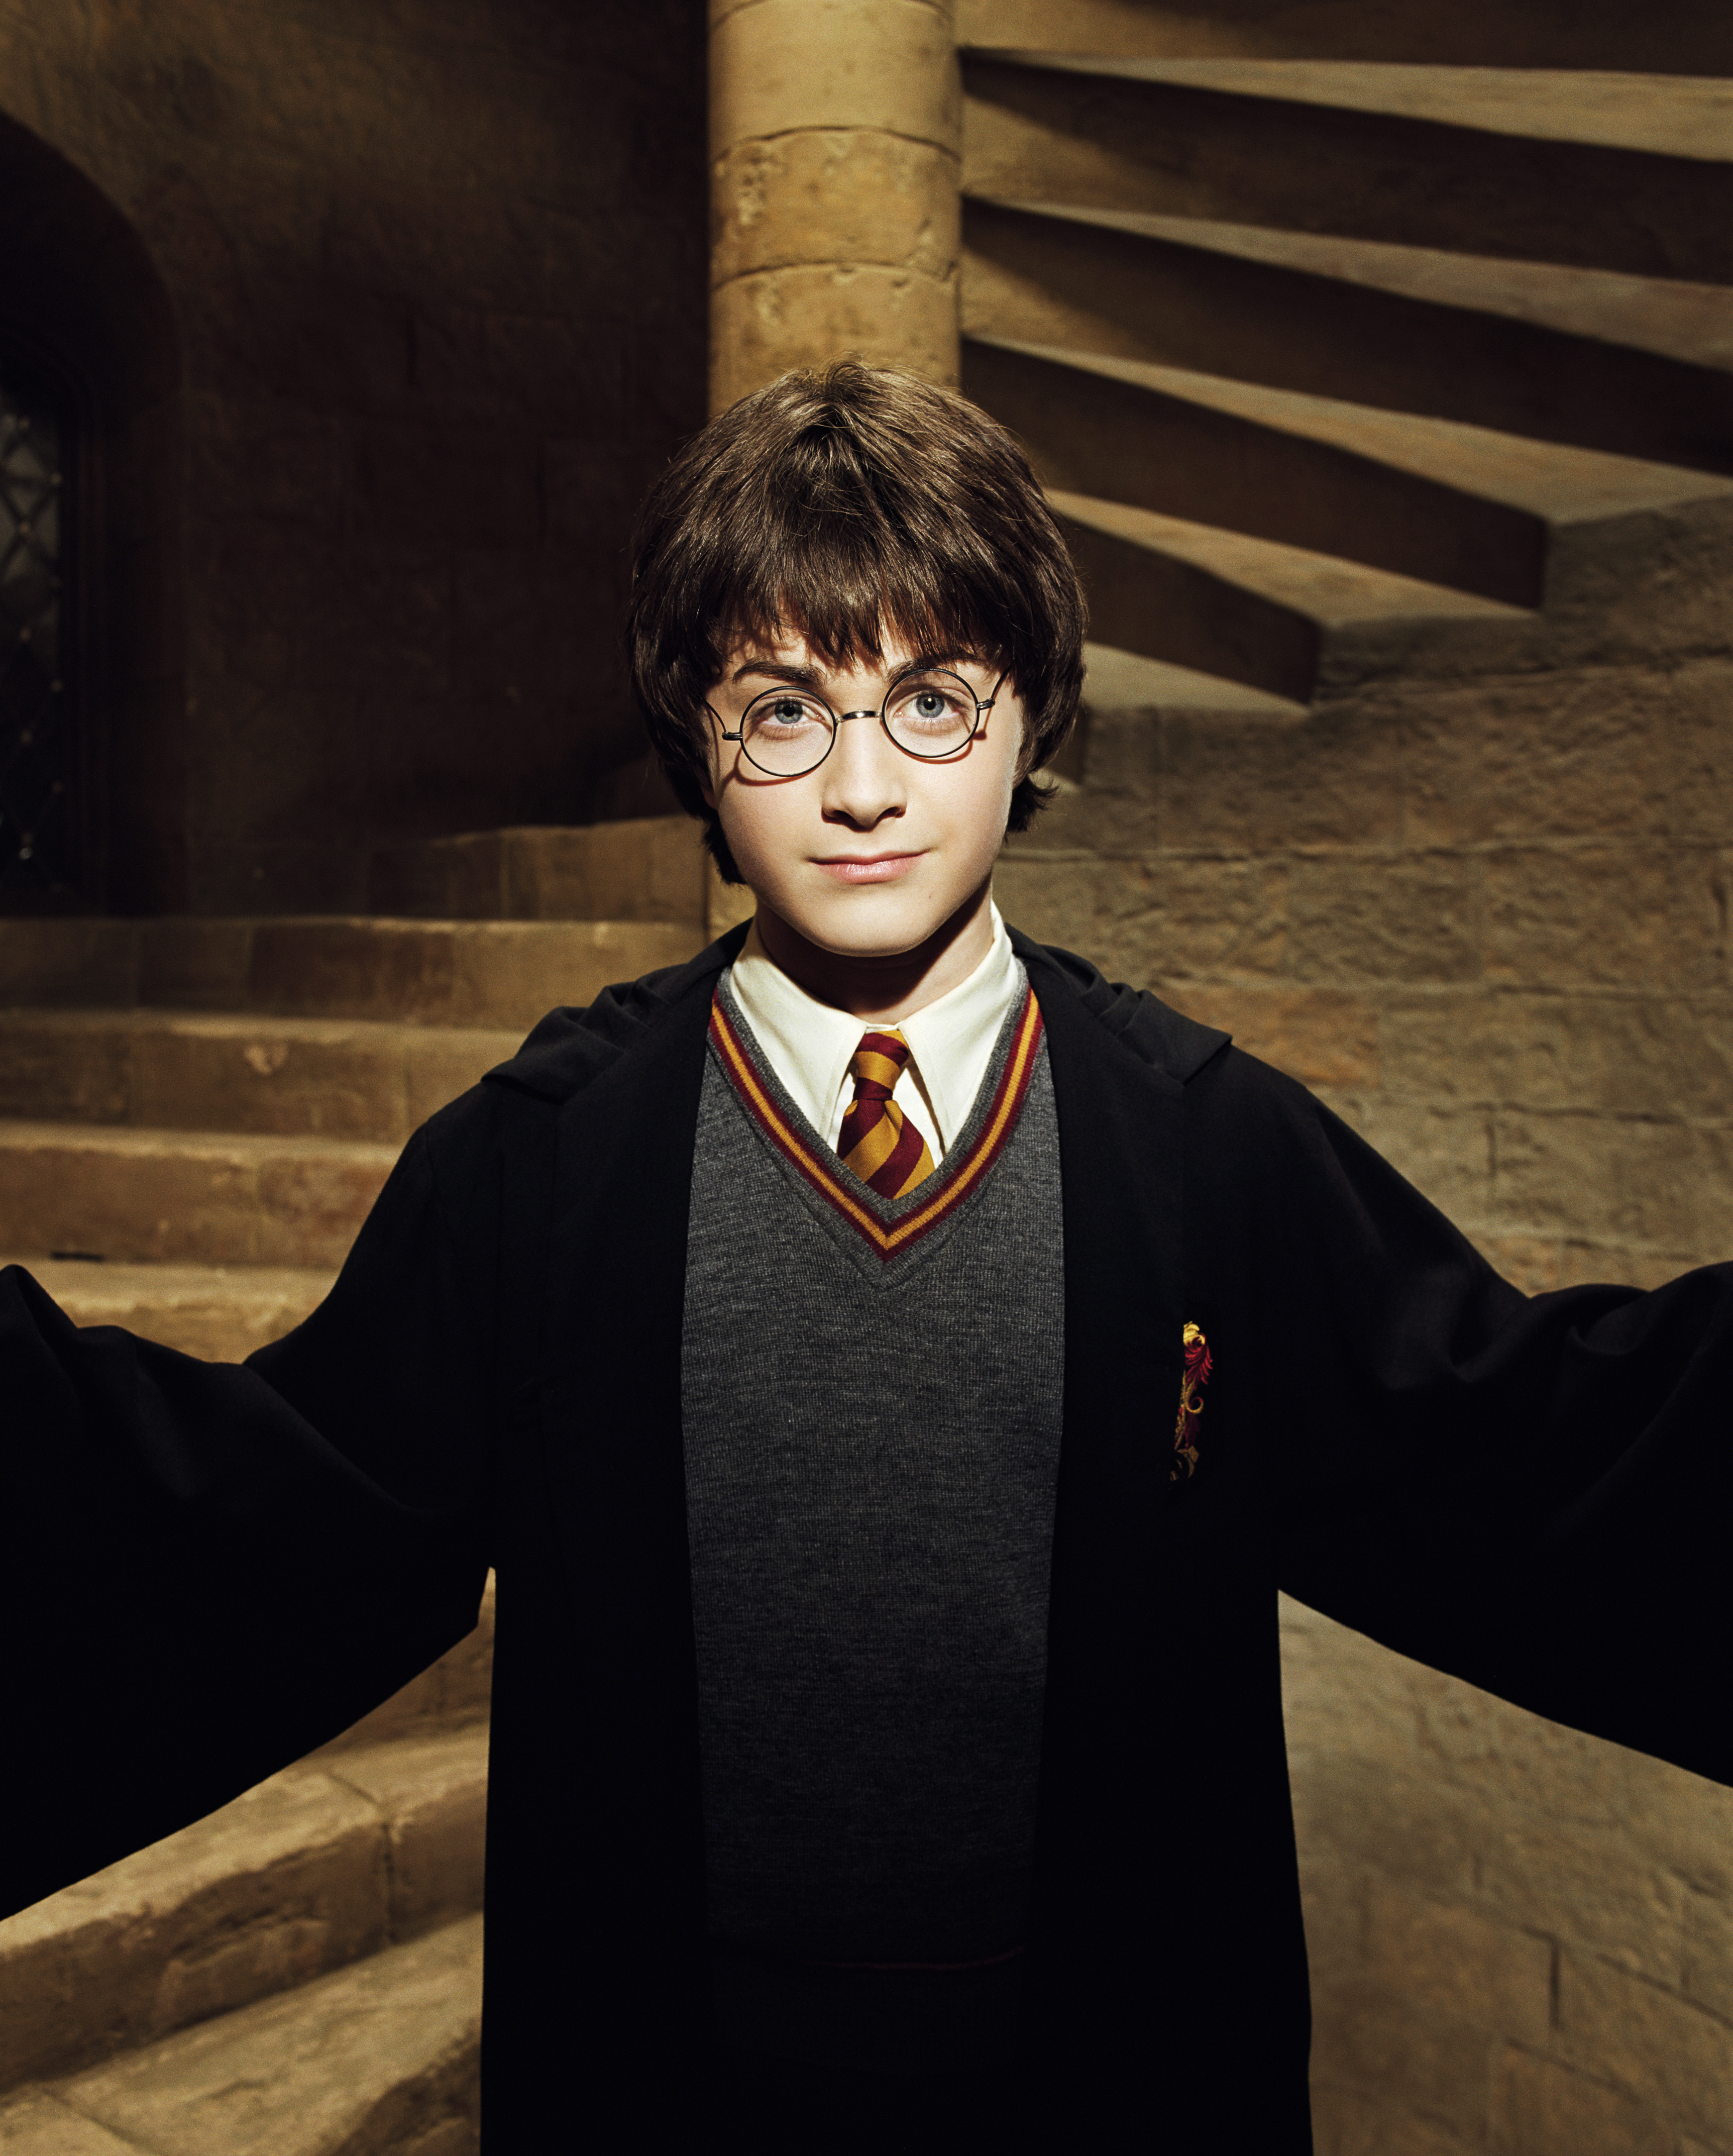 Harry potter is a series. Дэниел Рэдклифф Поттер.